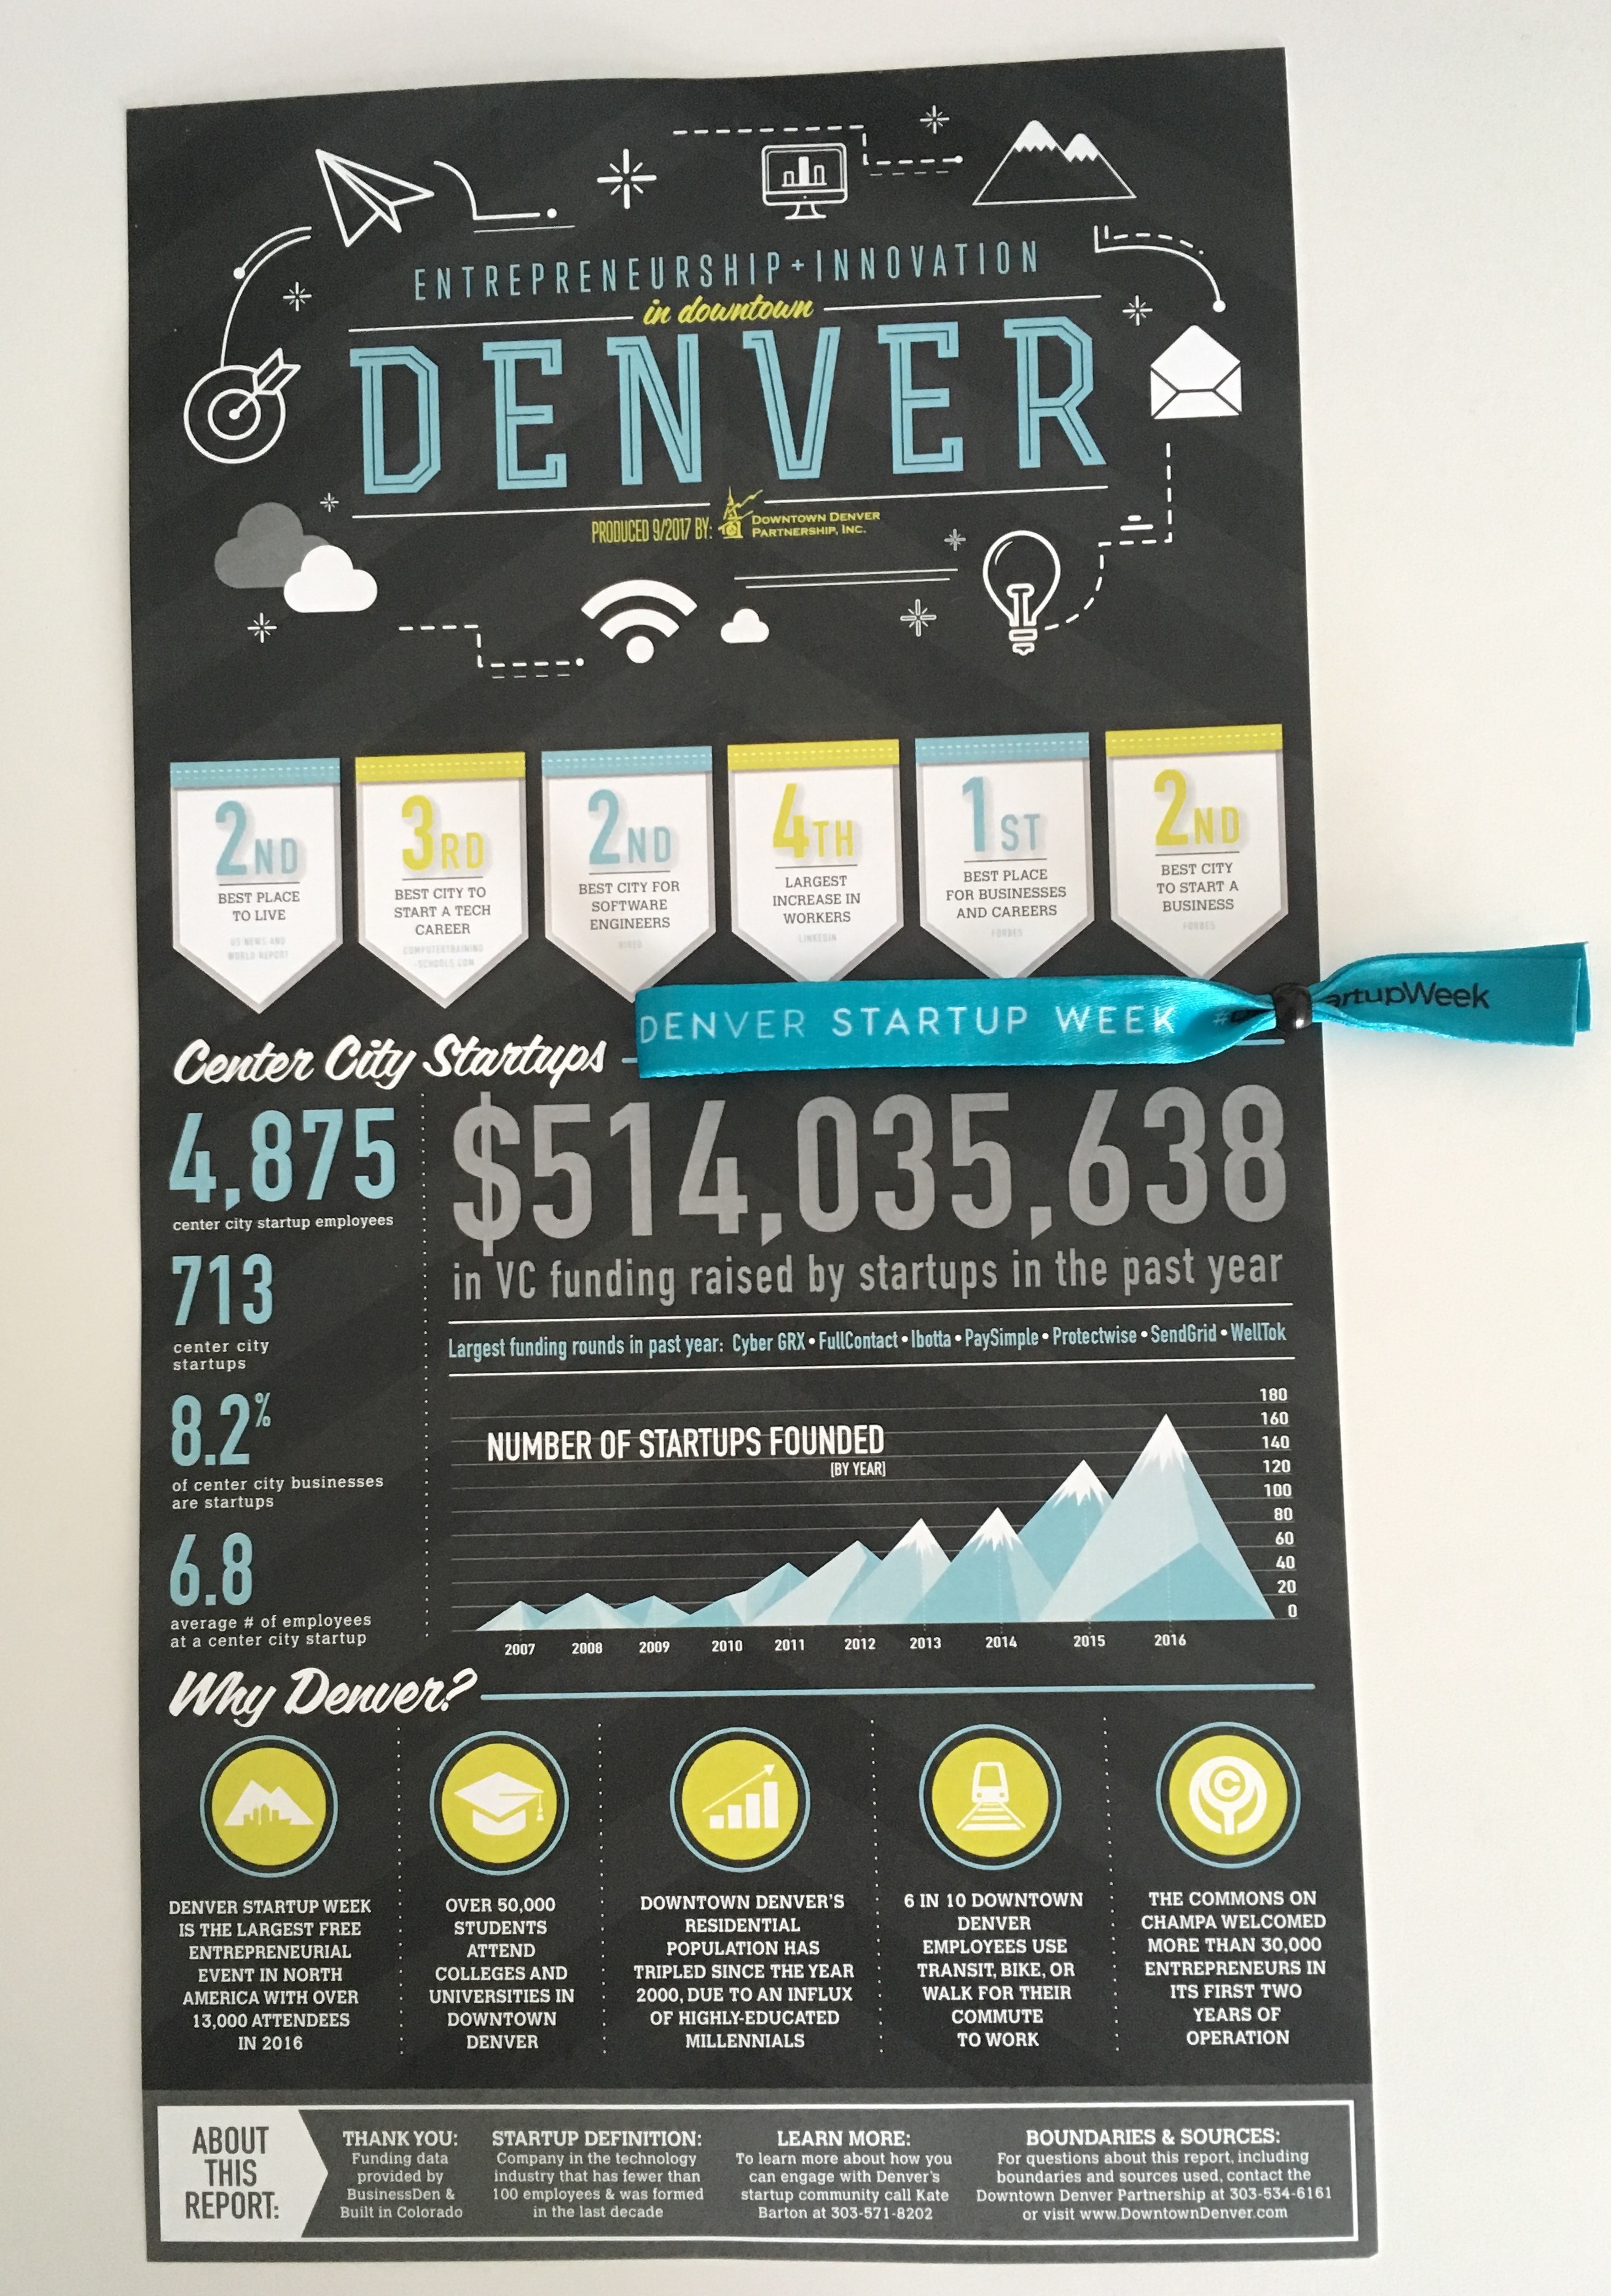 infographic from Denver Startup Week with statistics on entrepreneurship and innovation in Denver